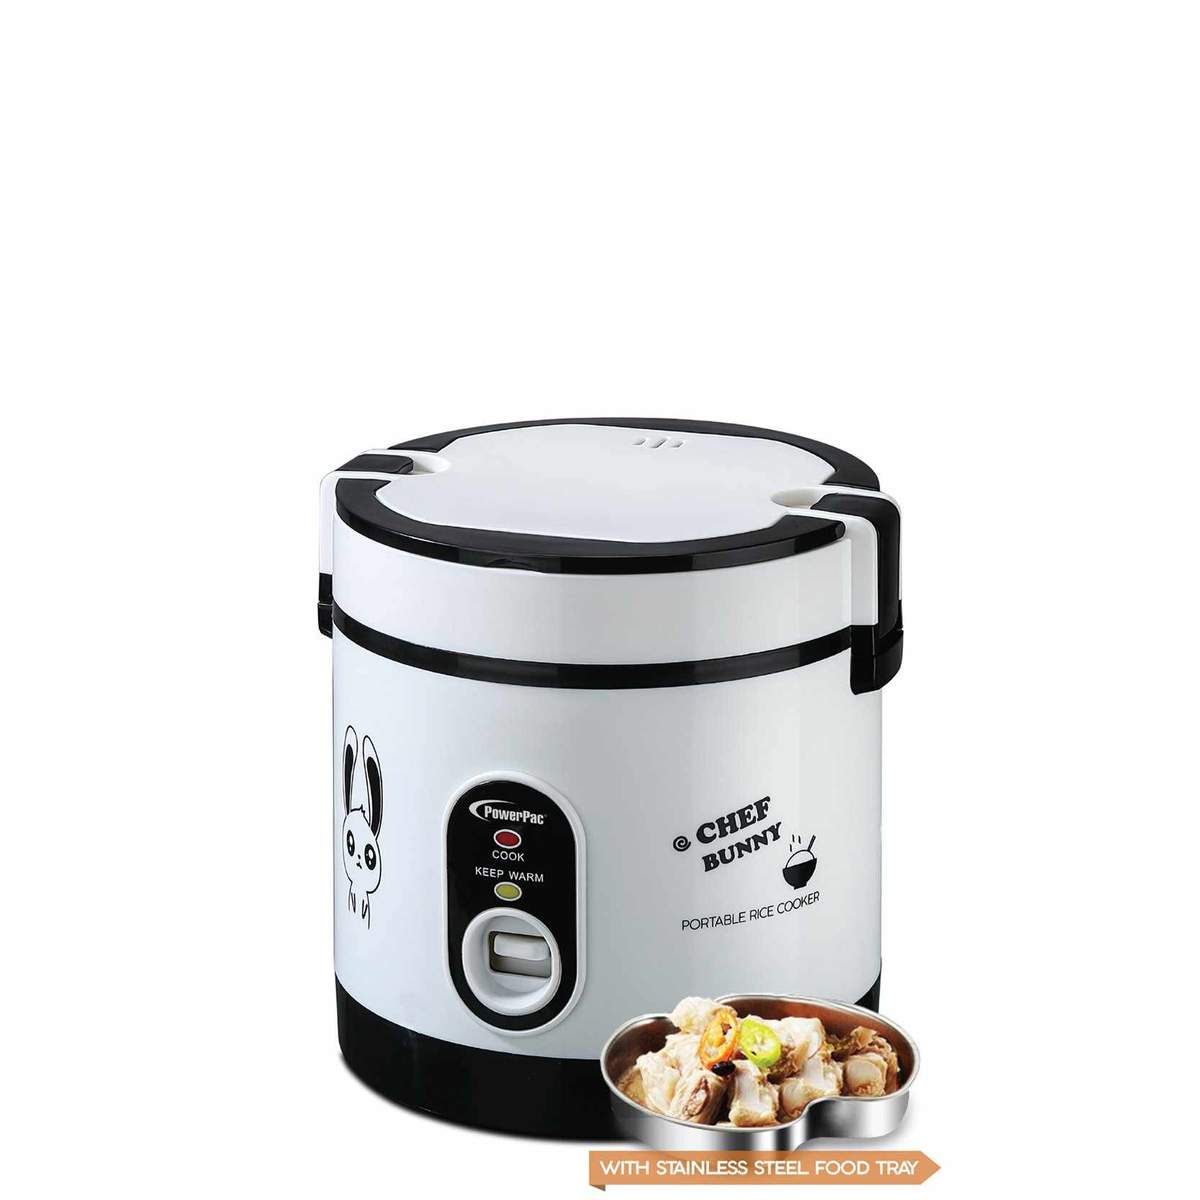 Powerpac 0.6L Mini Rice Cooker